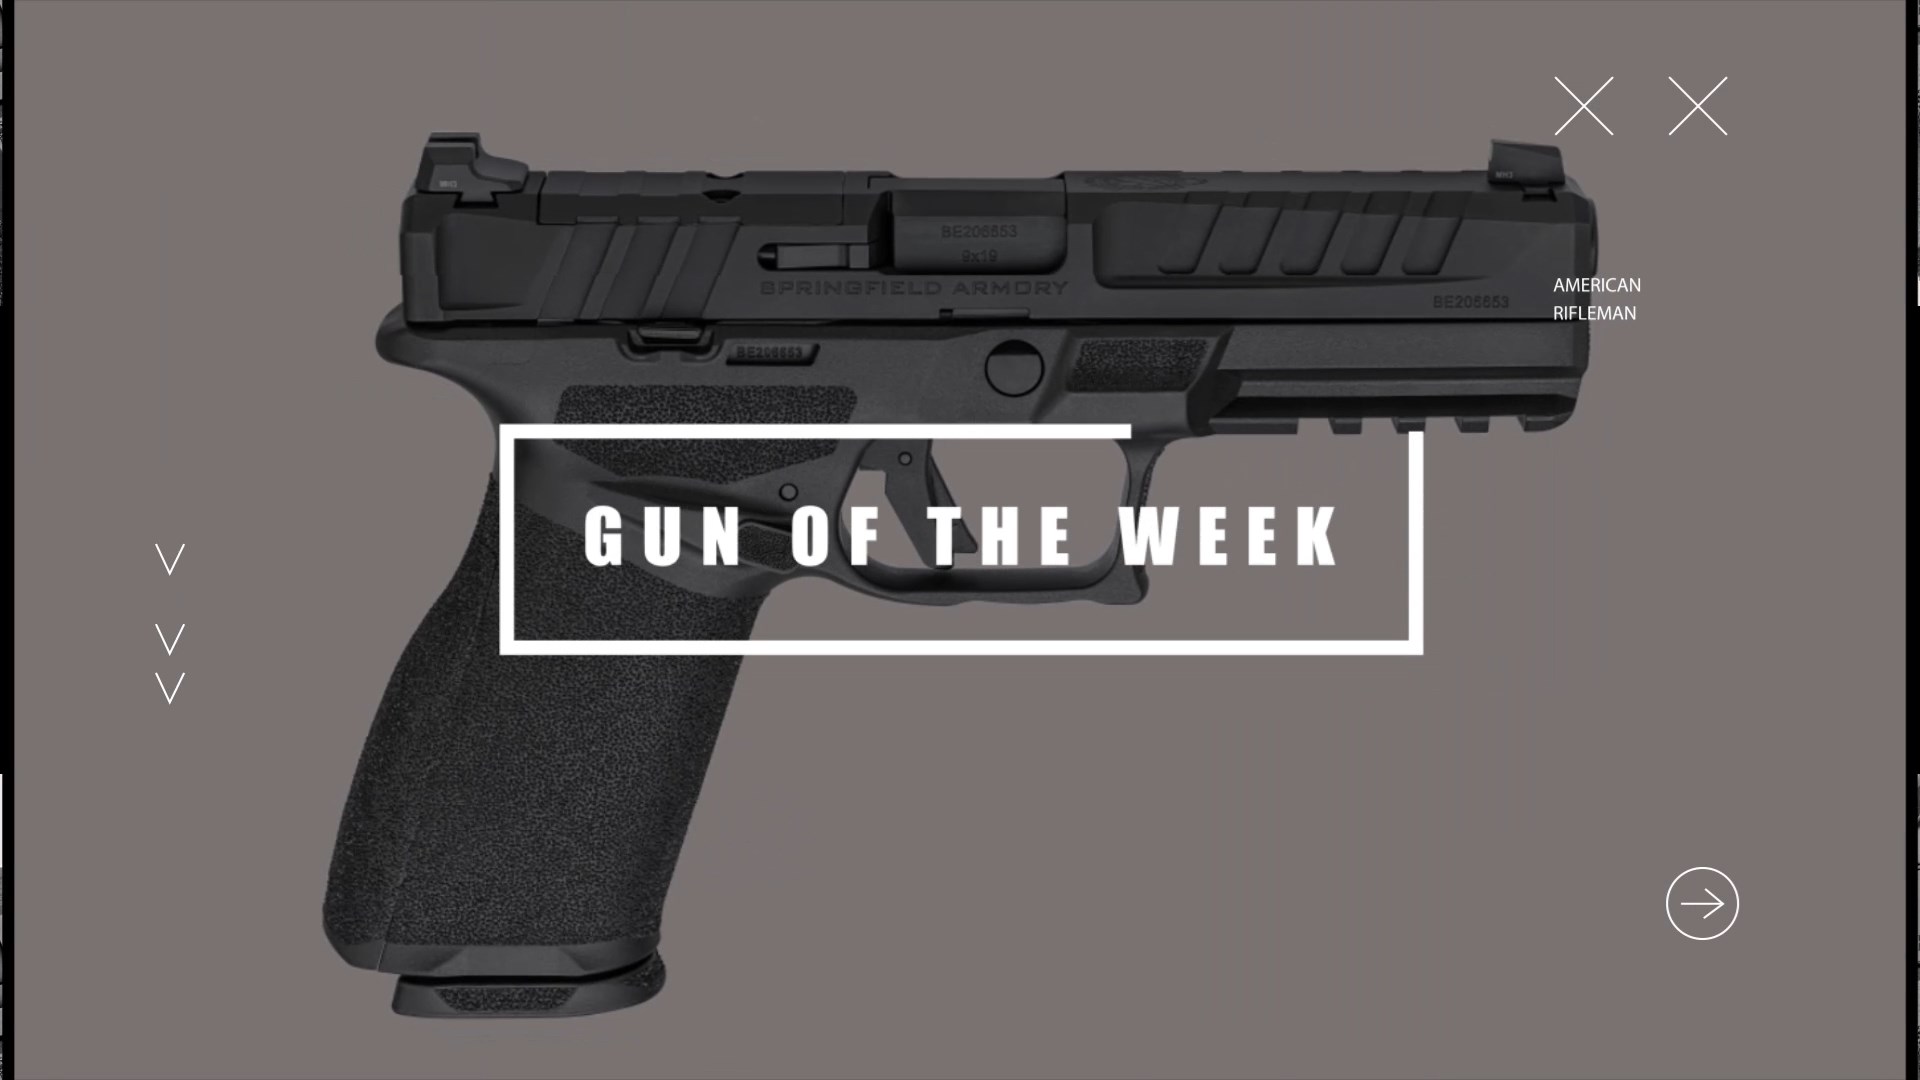 GUN OF THE WEEK title screen text on image overlay gun pistol springfield armory echelon 9mm american rifleman x